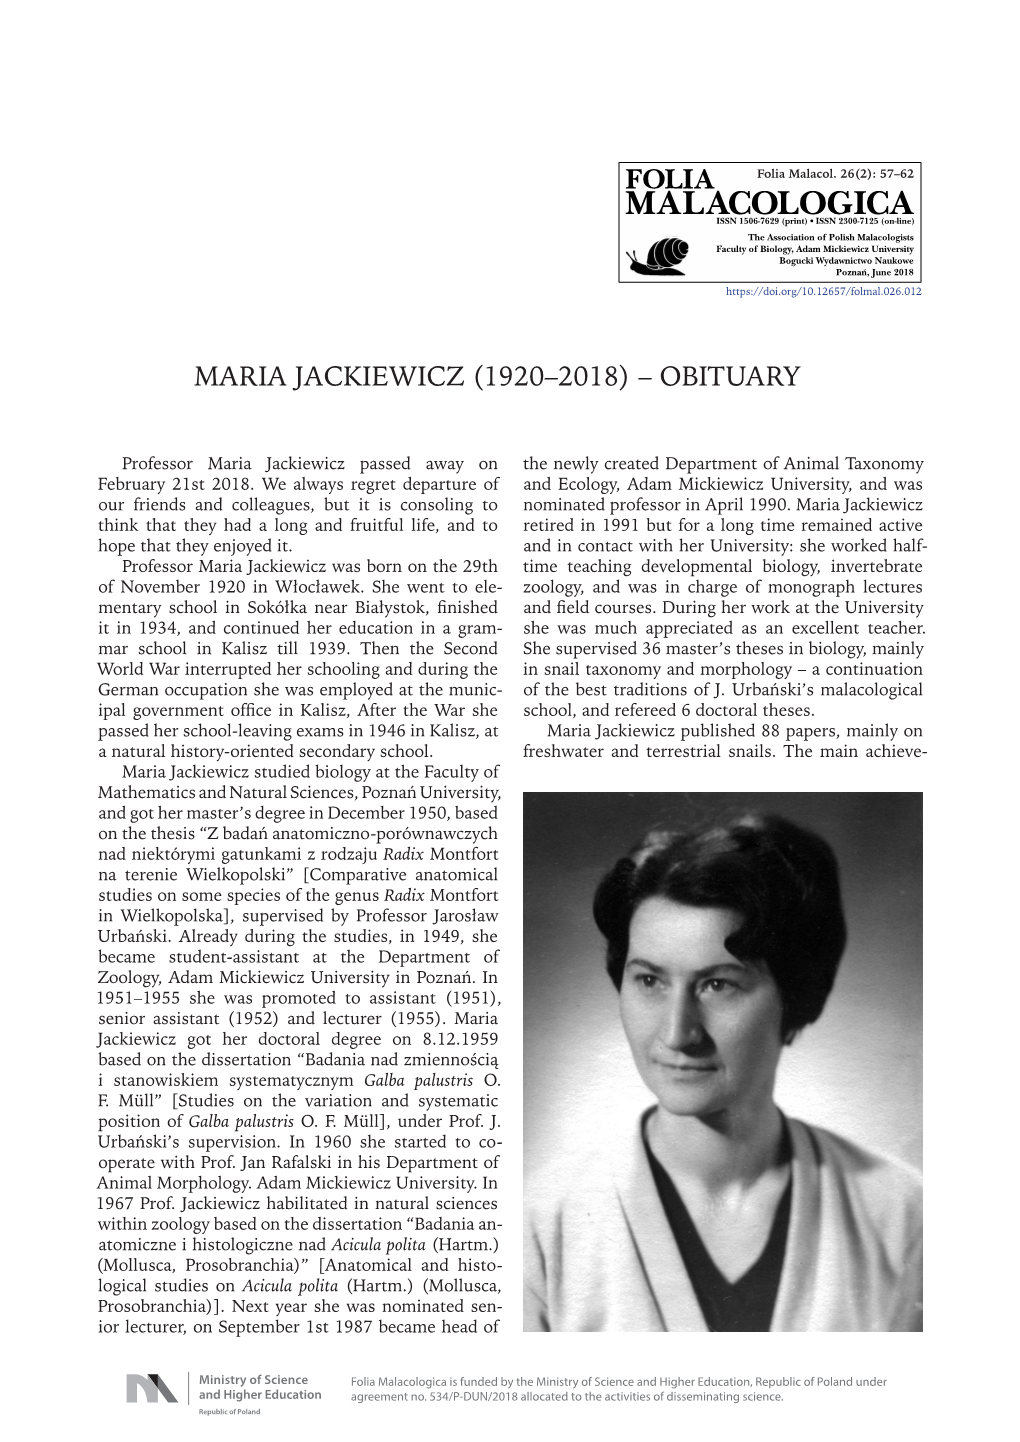 Maria Jackiewicz (1920–2018) – Obituary